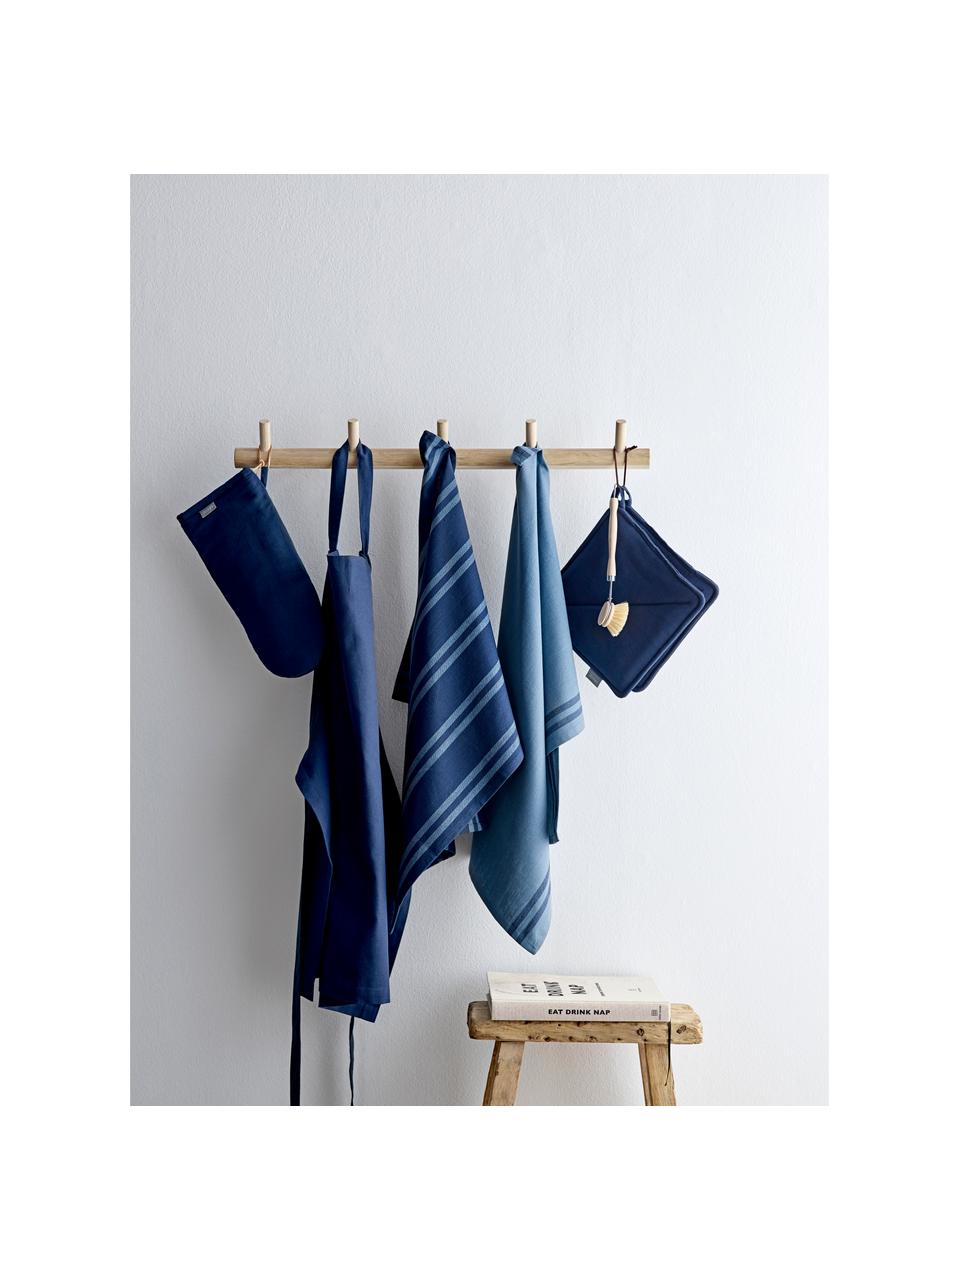 Kuchyňské chňapky Soft, 2 ks, 100 % bavlna, Tmavě modrá, Š 19 cm, V 5 cm